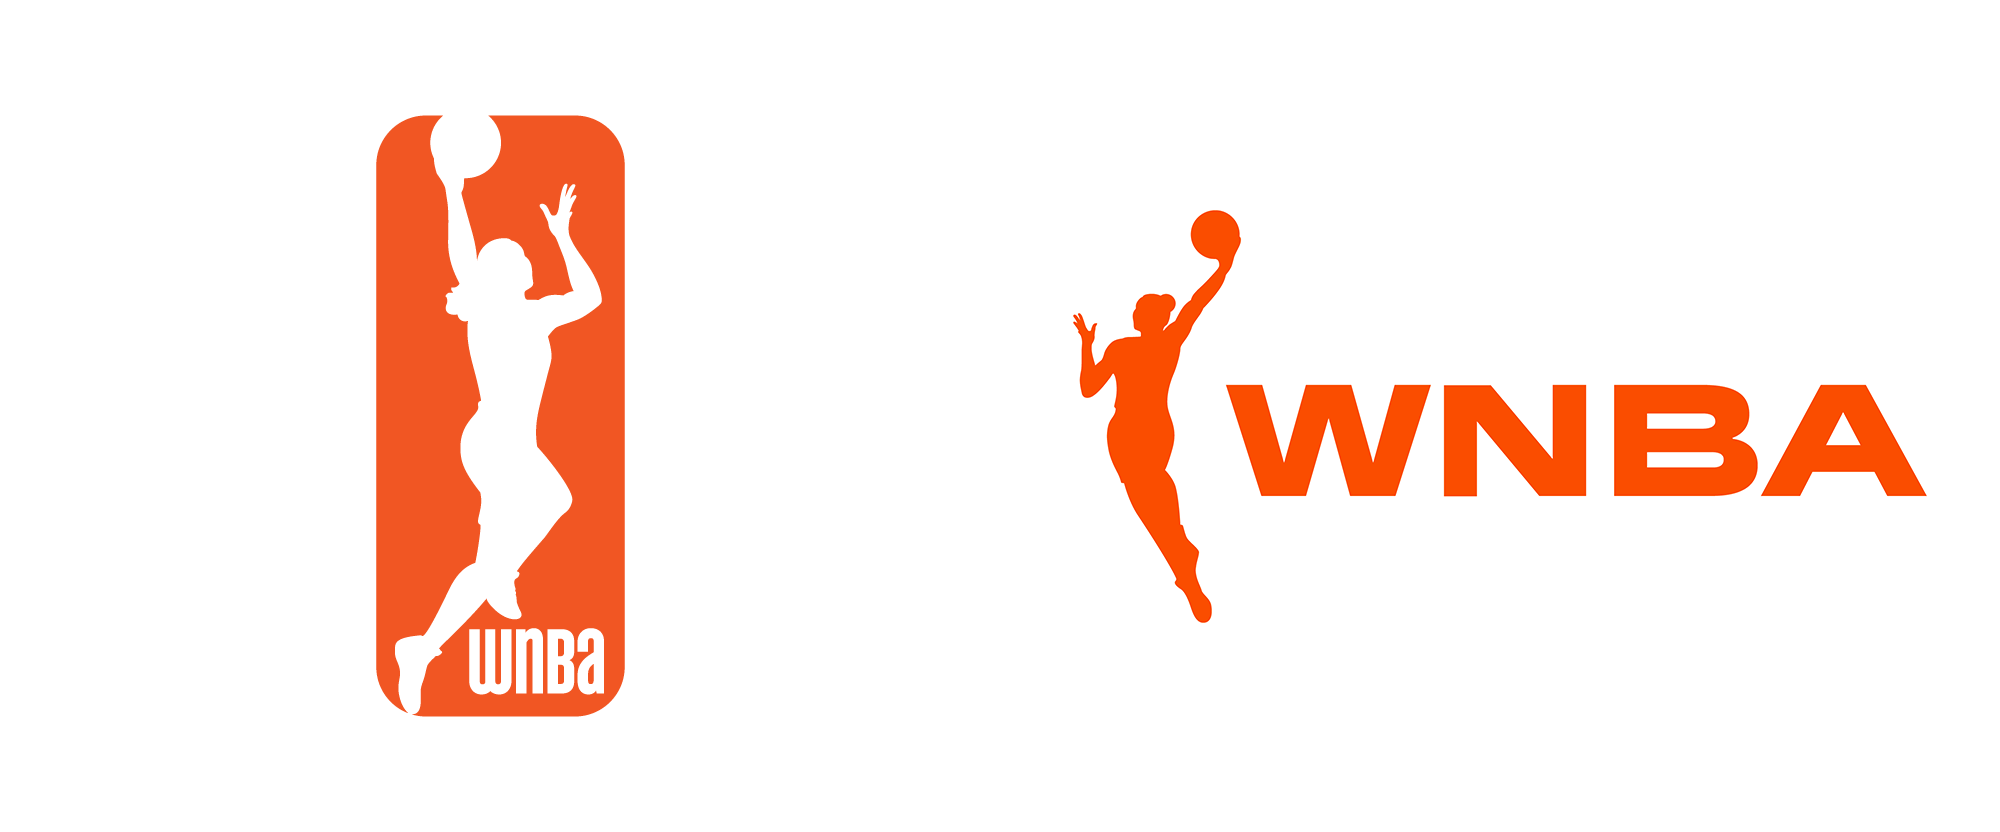 DRAFT WNBA